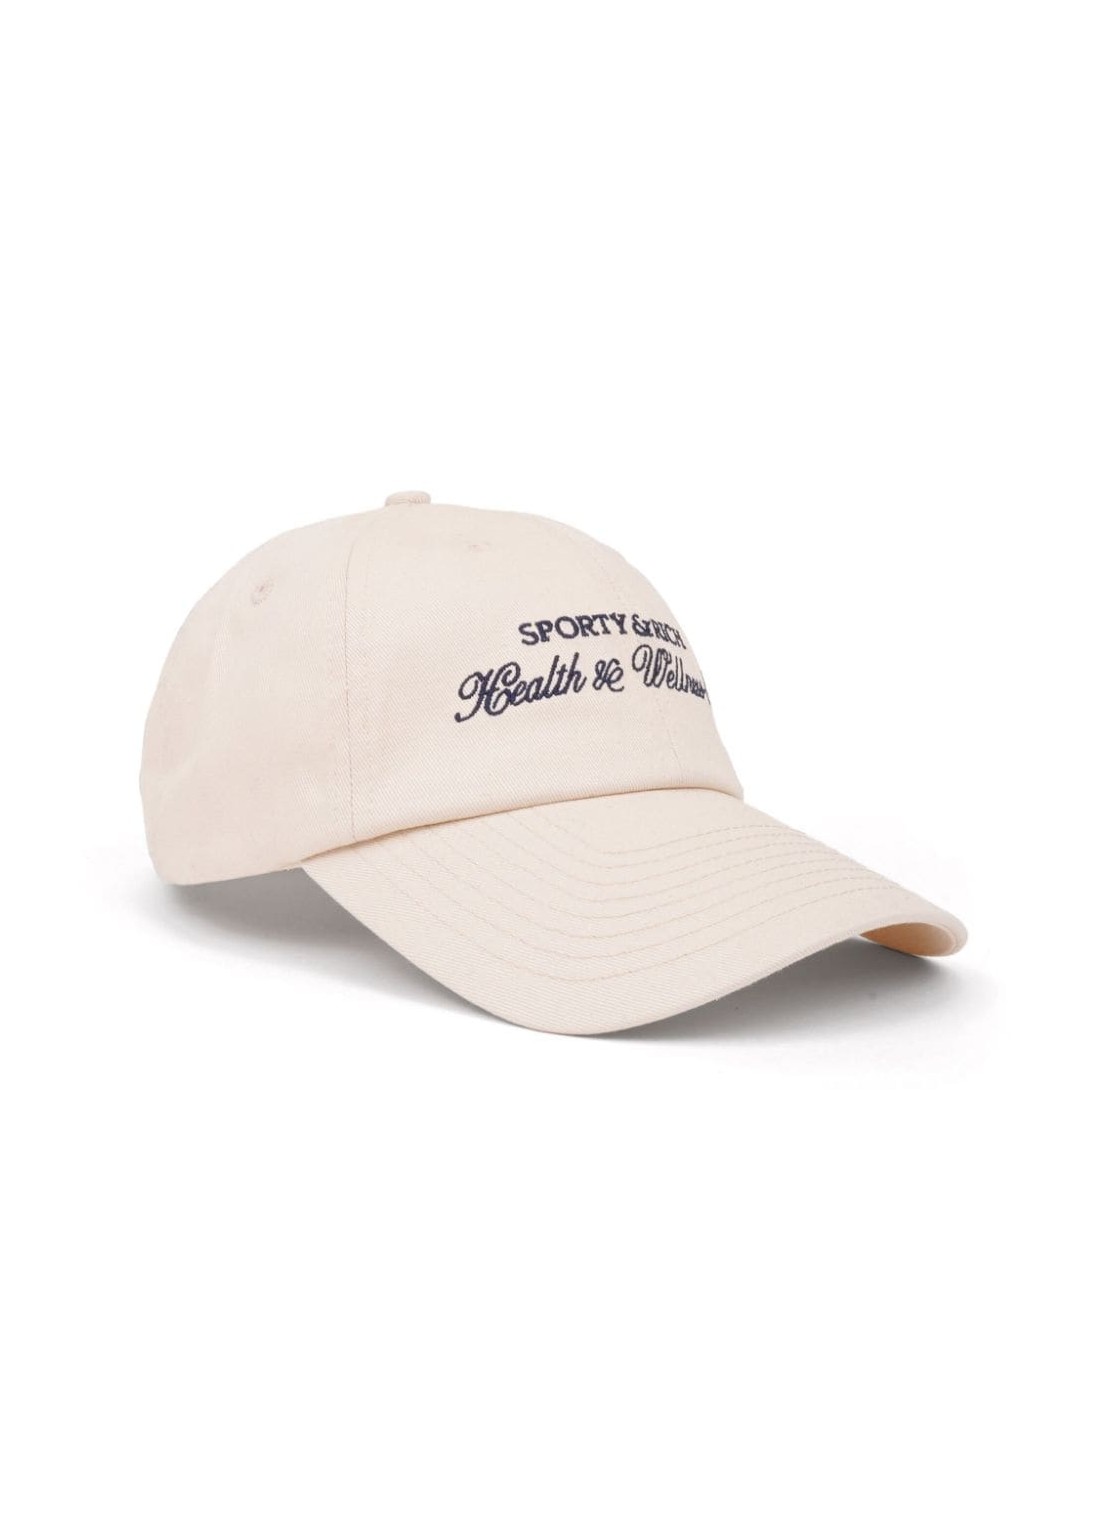 Gorras sporty & rich cap womanh&w club embroidered hat cream/navy - ac039s412hc cream talla beige
 